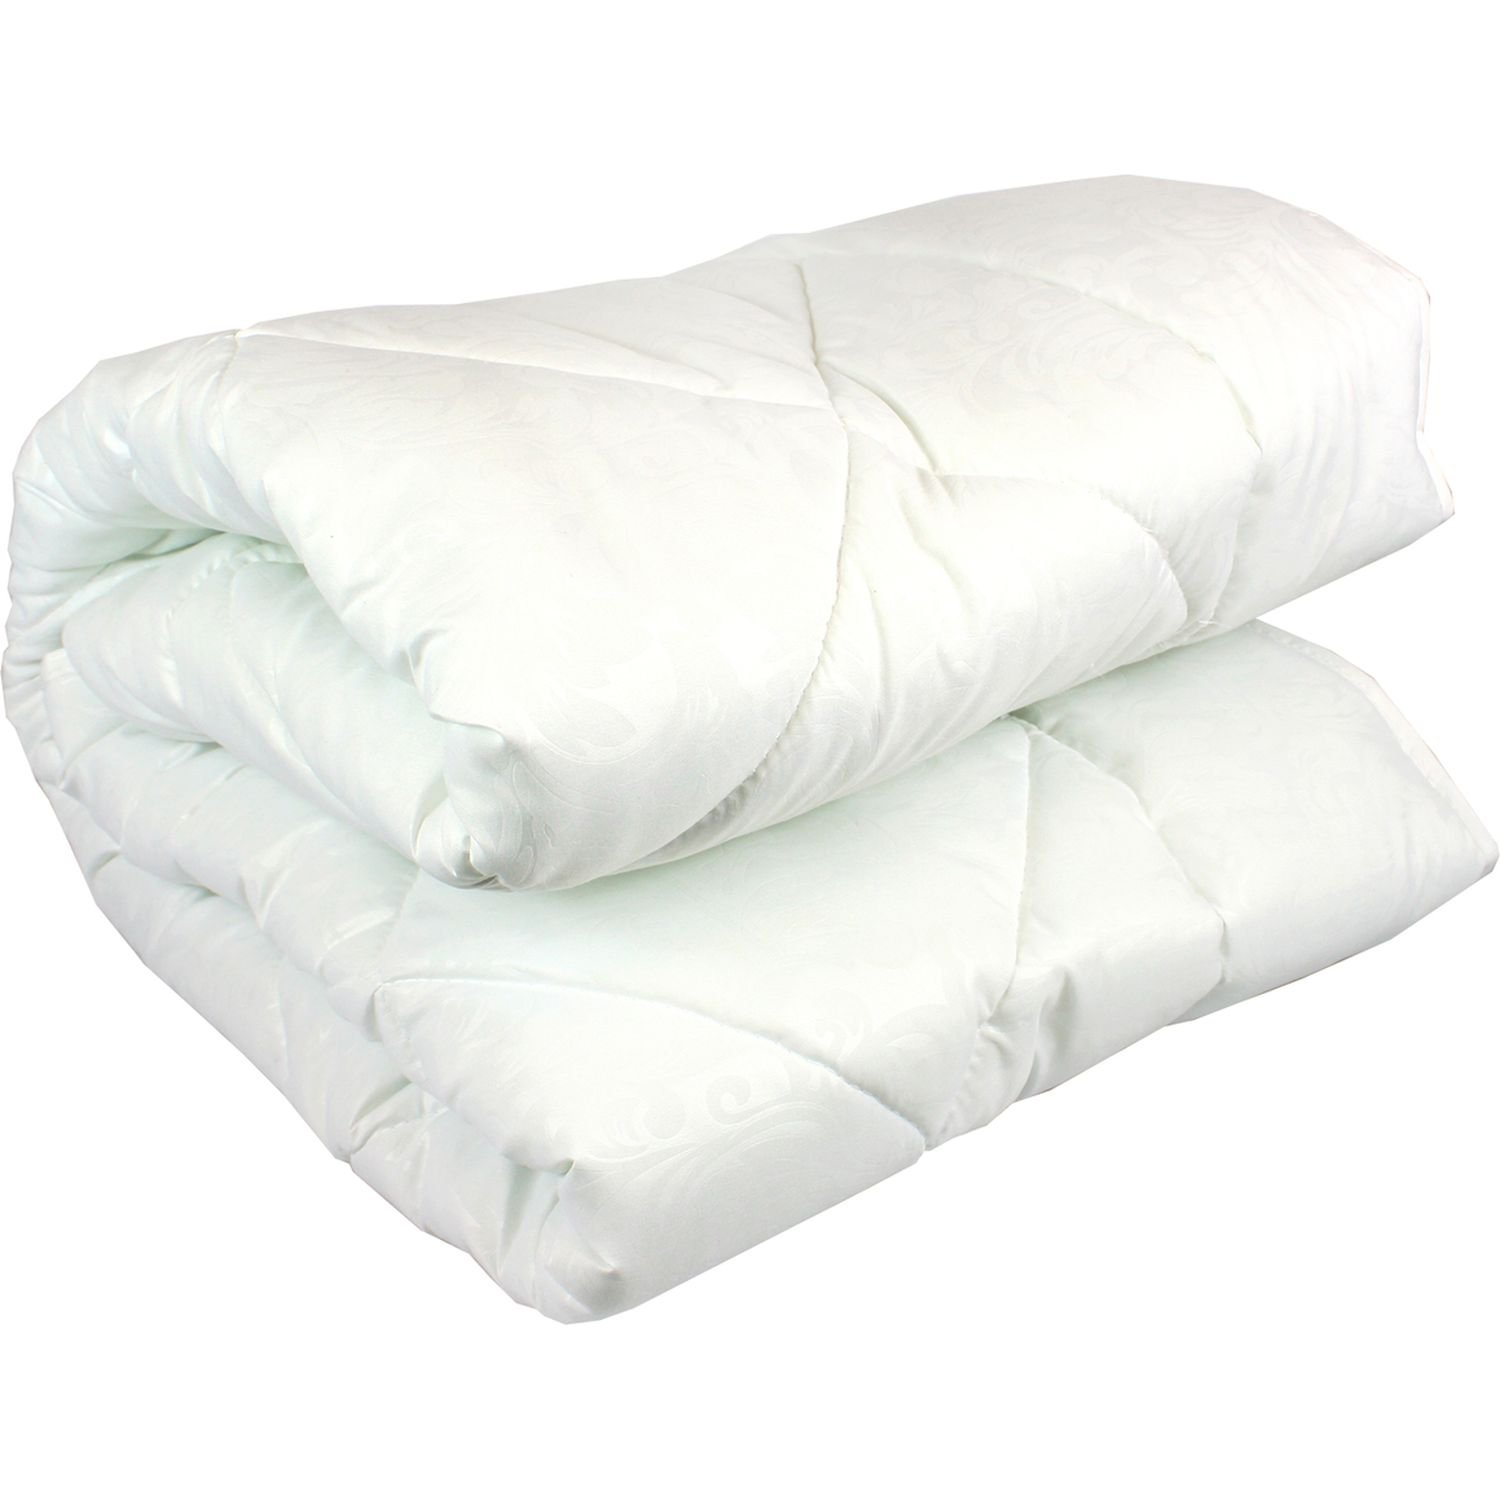 Одеяло LightHouse Soft Line white, 210х140 см, белое (38338) - фото 2